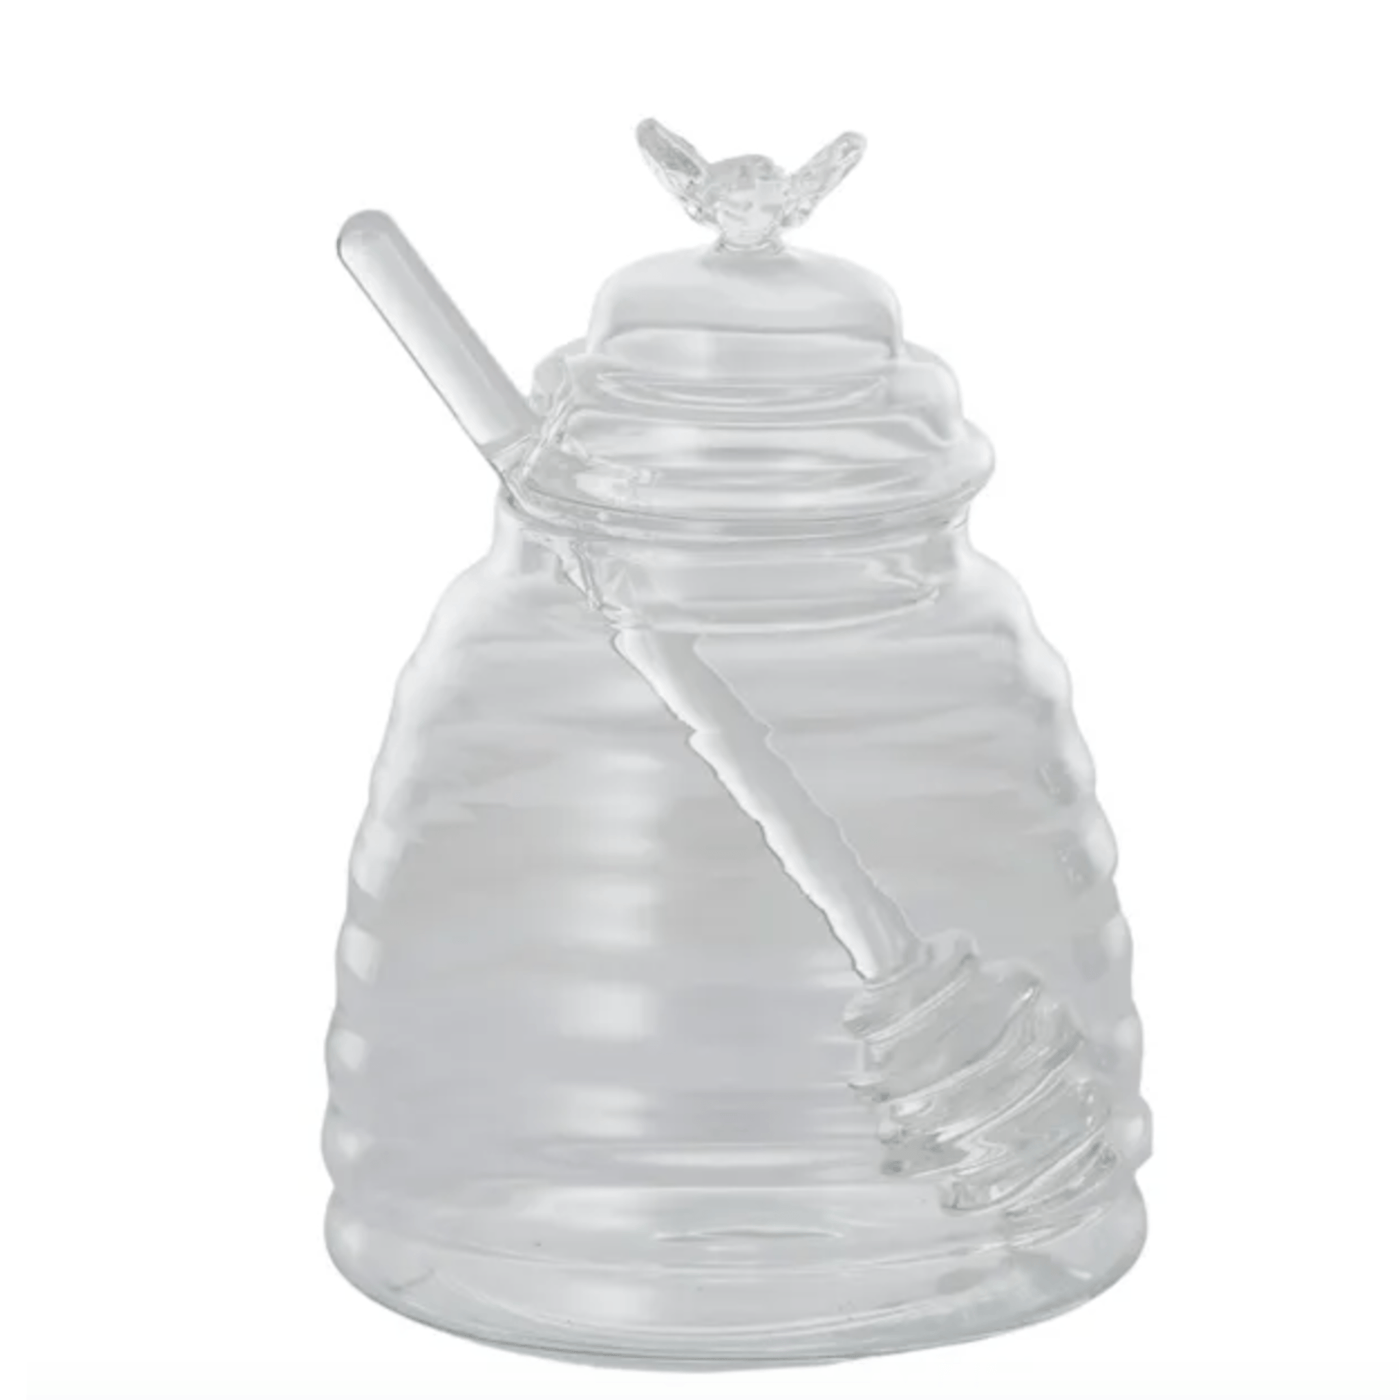 Glass Honey Pot With Dipper